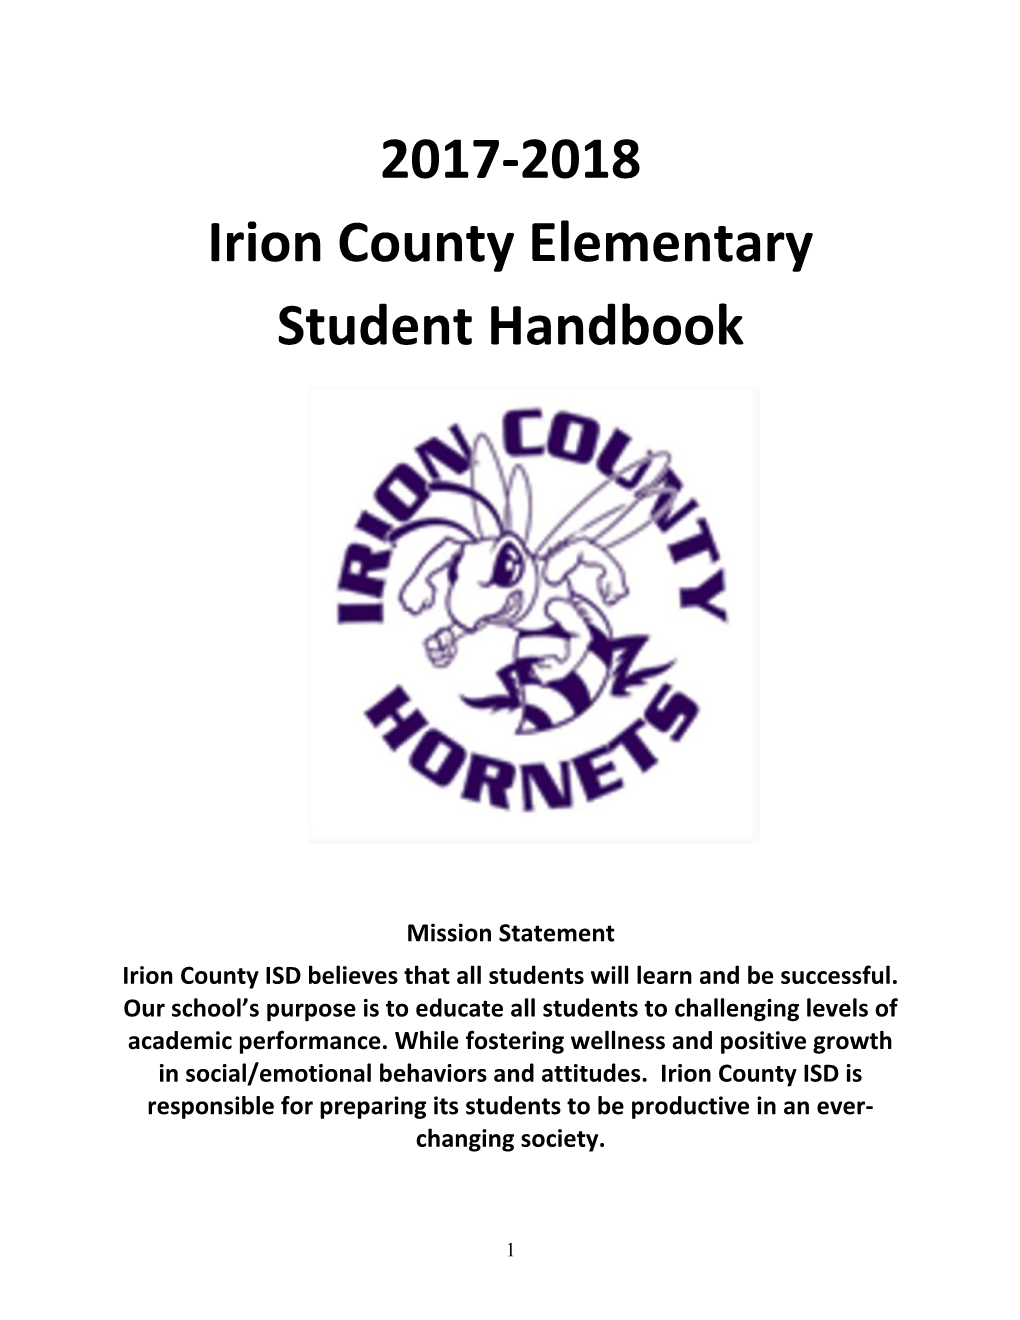 Irion County Elementary